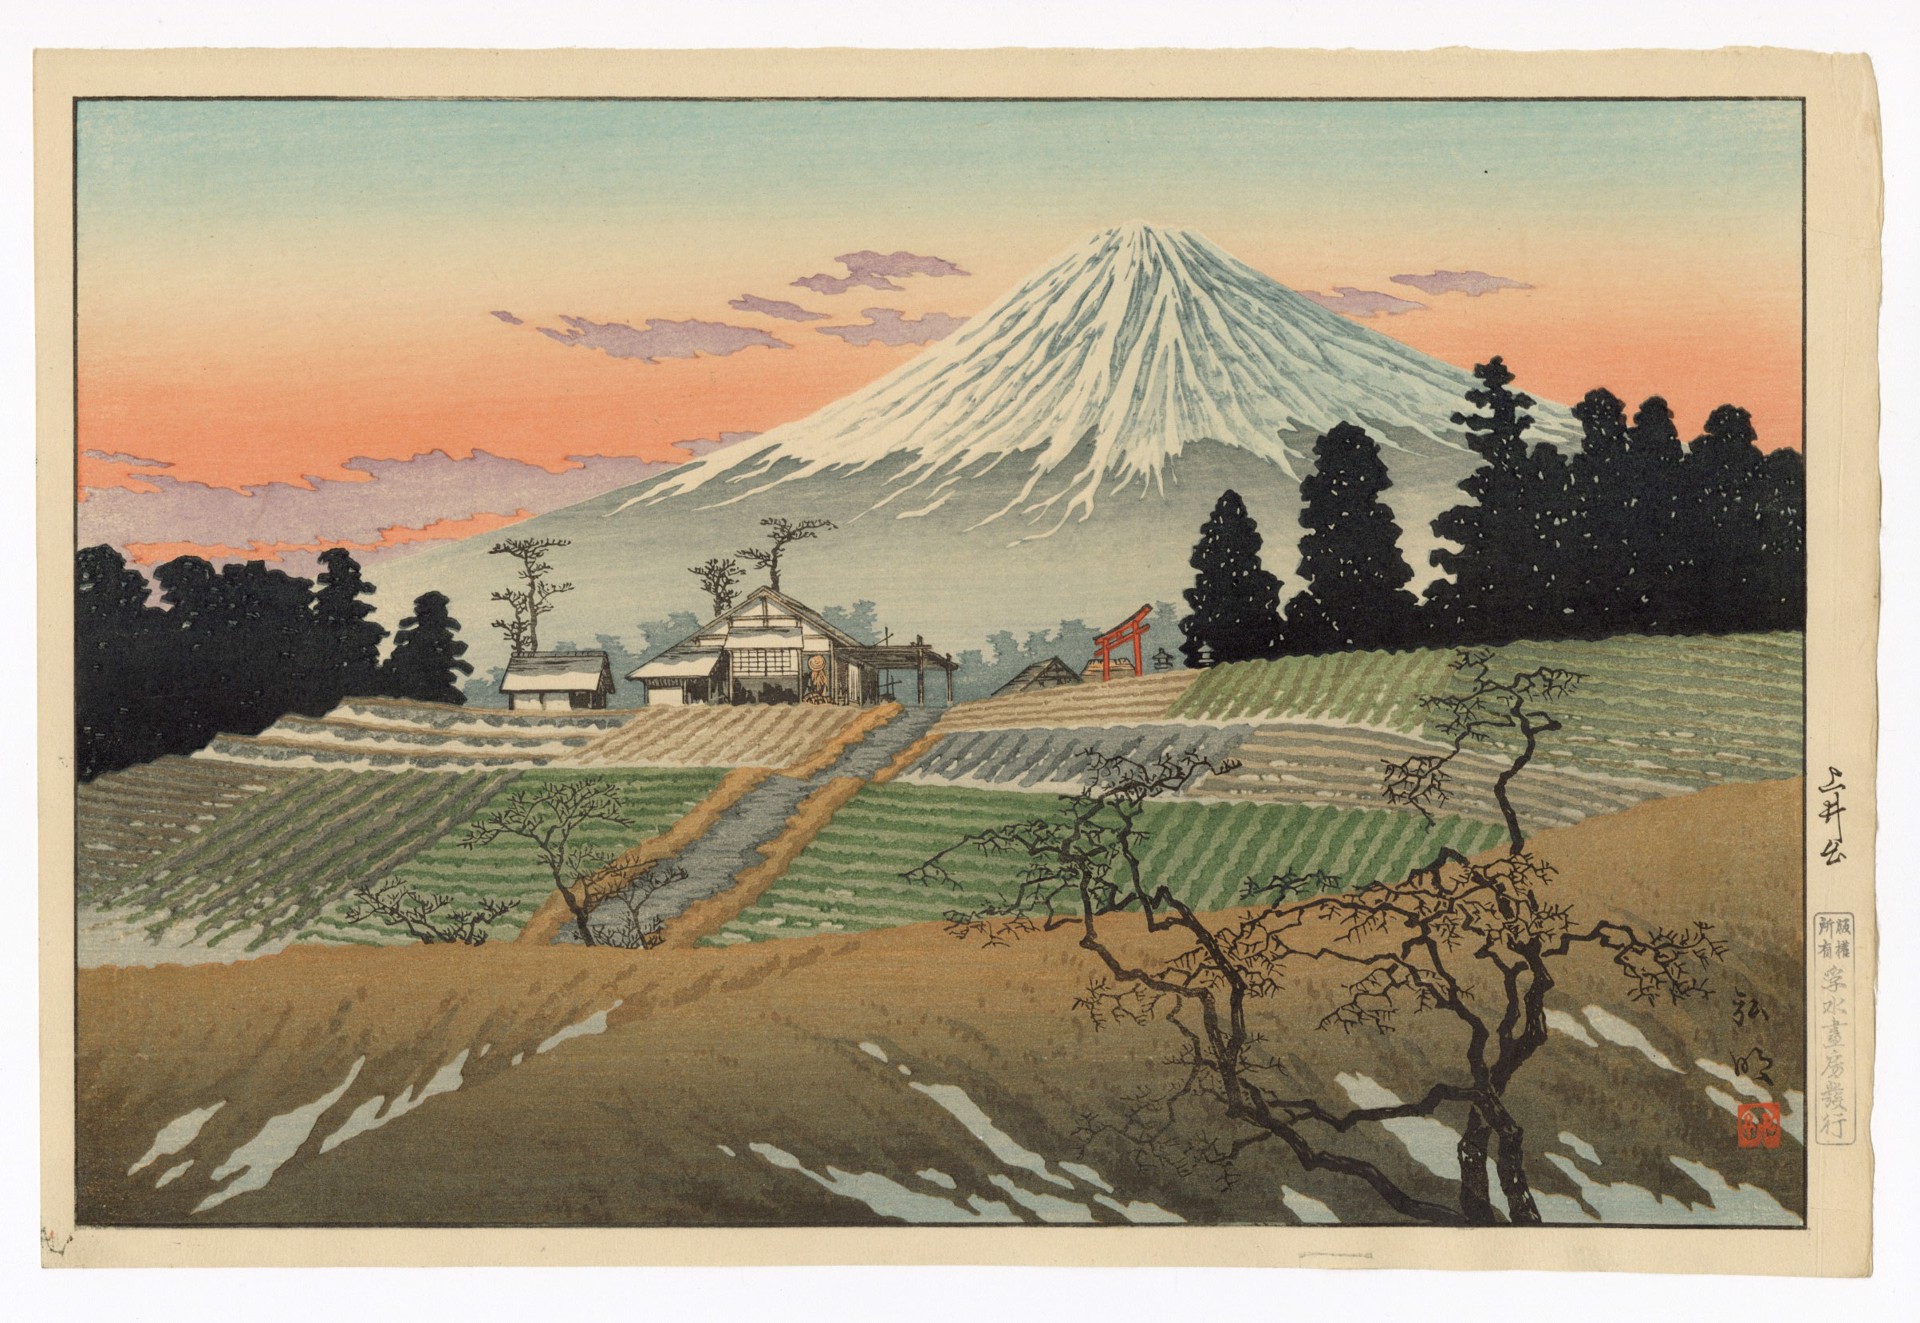 Kamiide Mt. Fuji in the Four Seasons by Takahashi Hiroaki